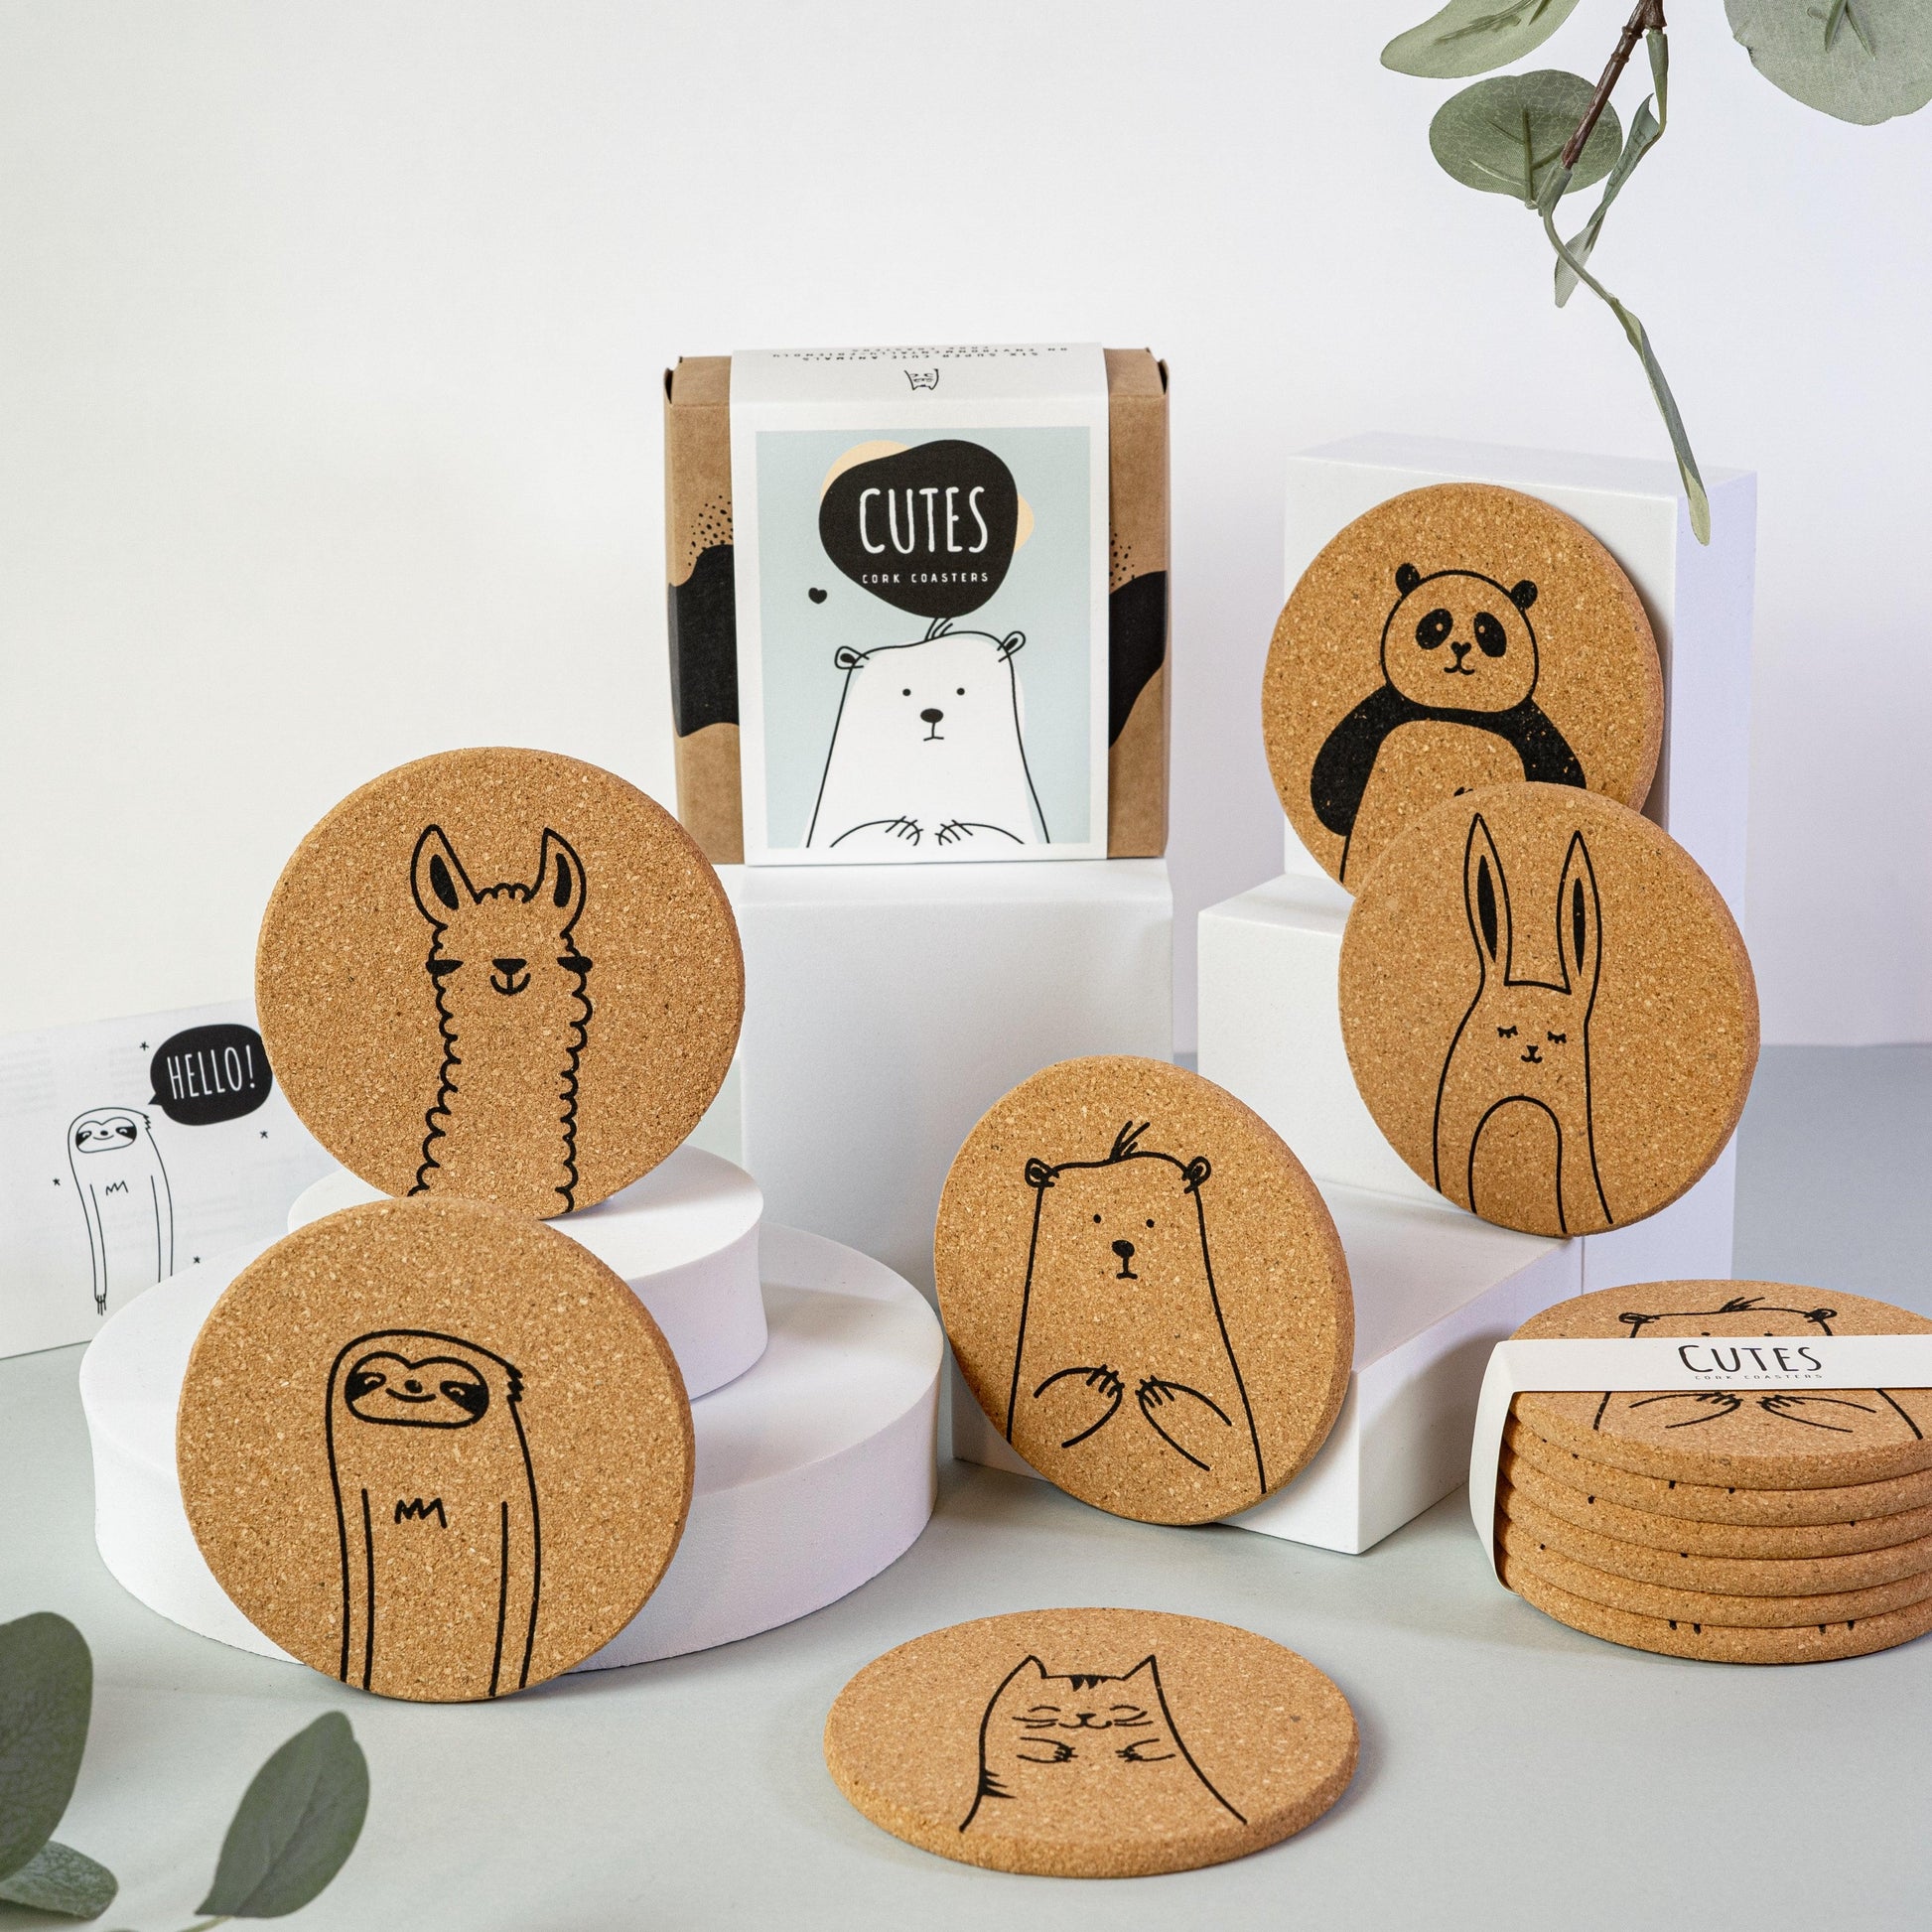 Cutes - Cork coasters, set of 6, cute animals - PepMelon